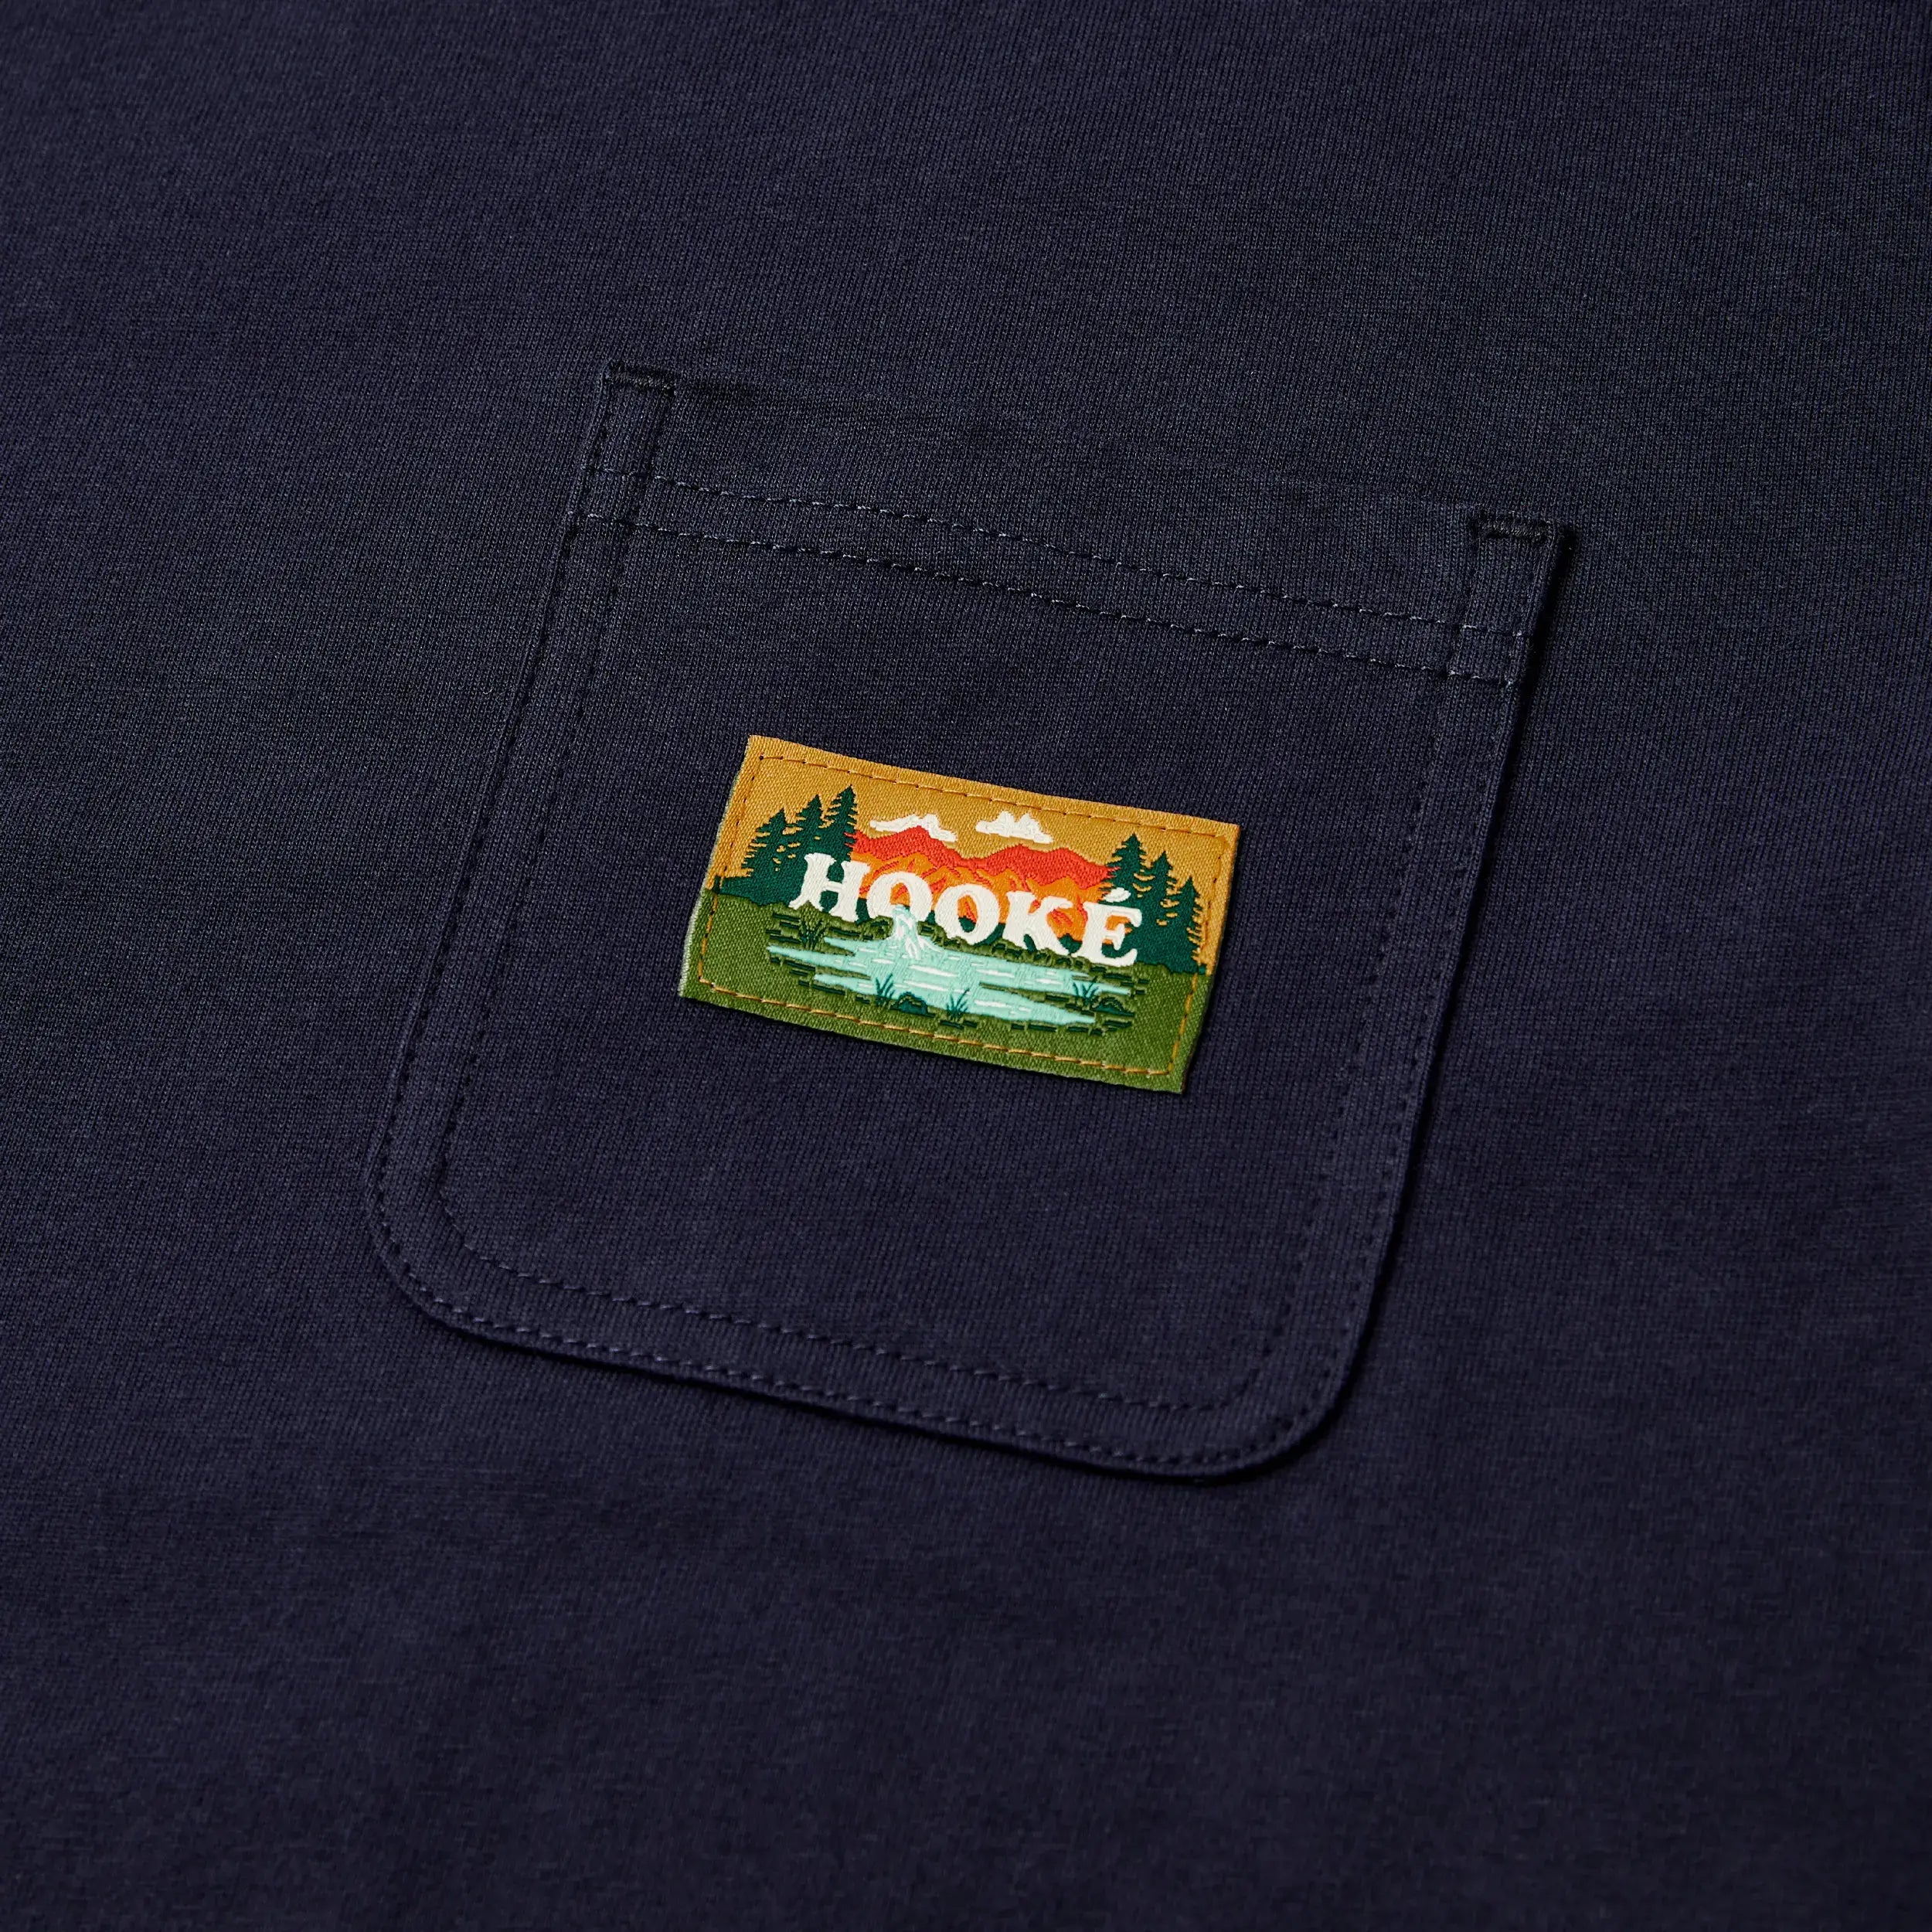 W's Landscape Pocket T-Shirt - Hooké